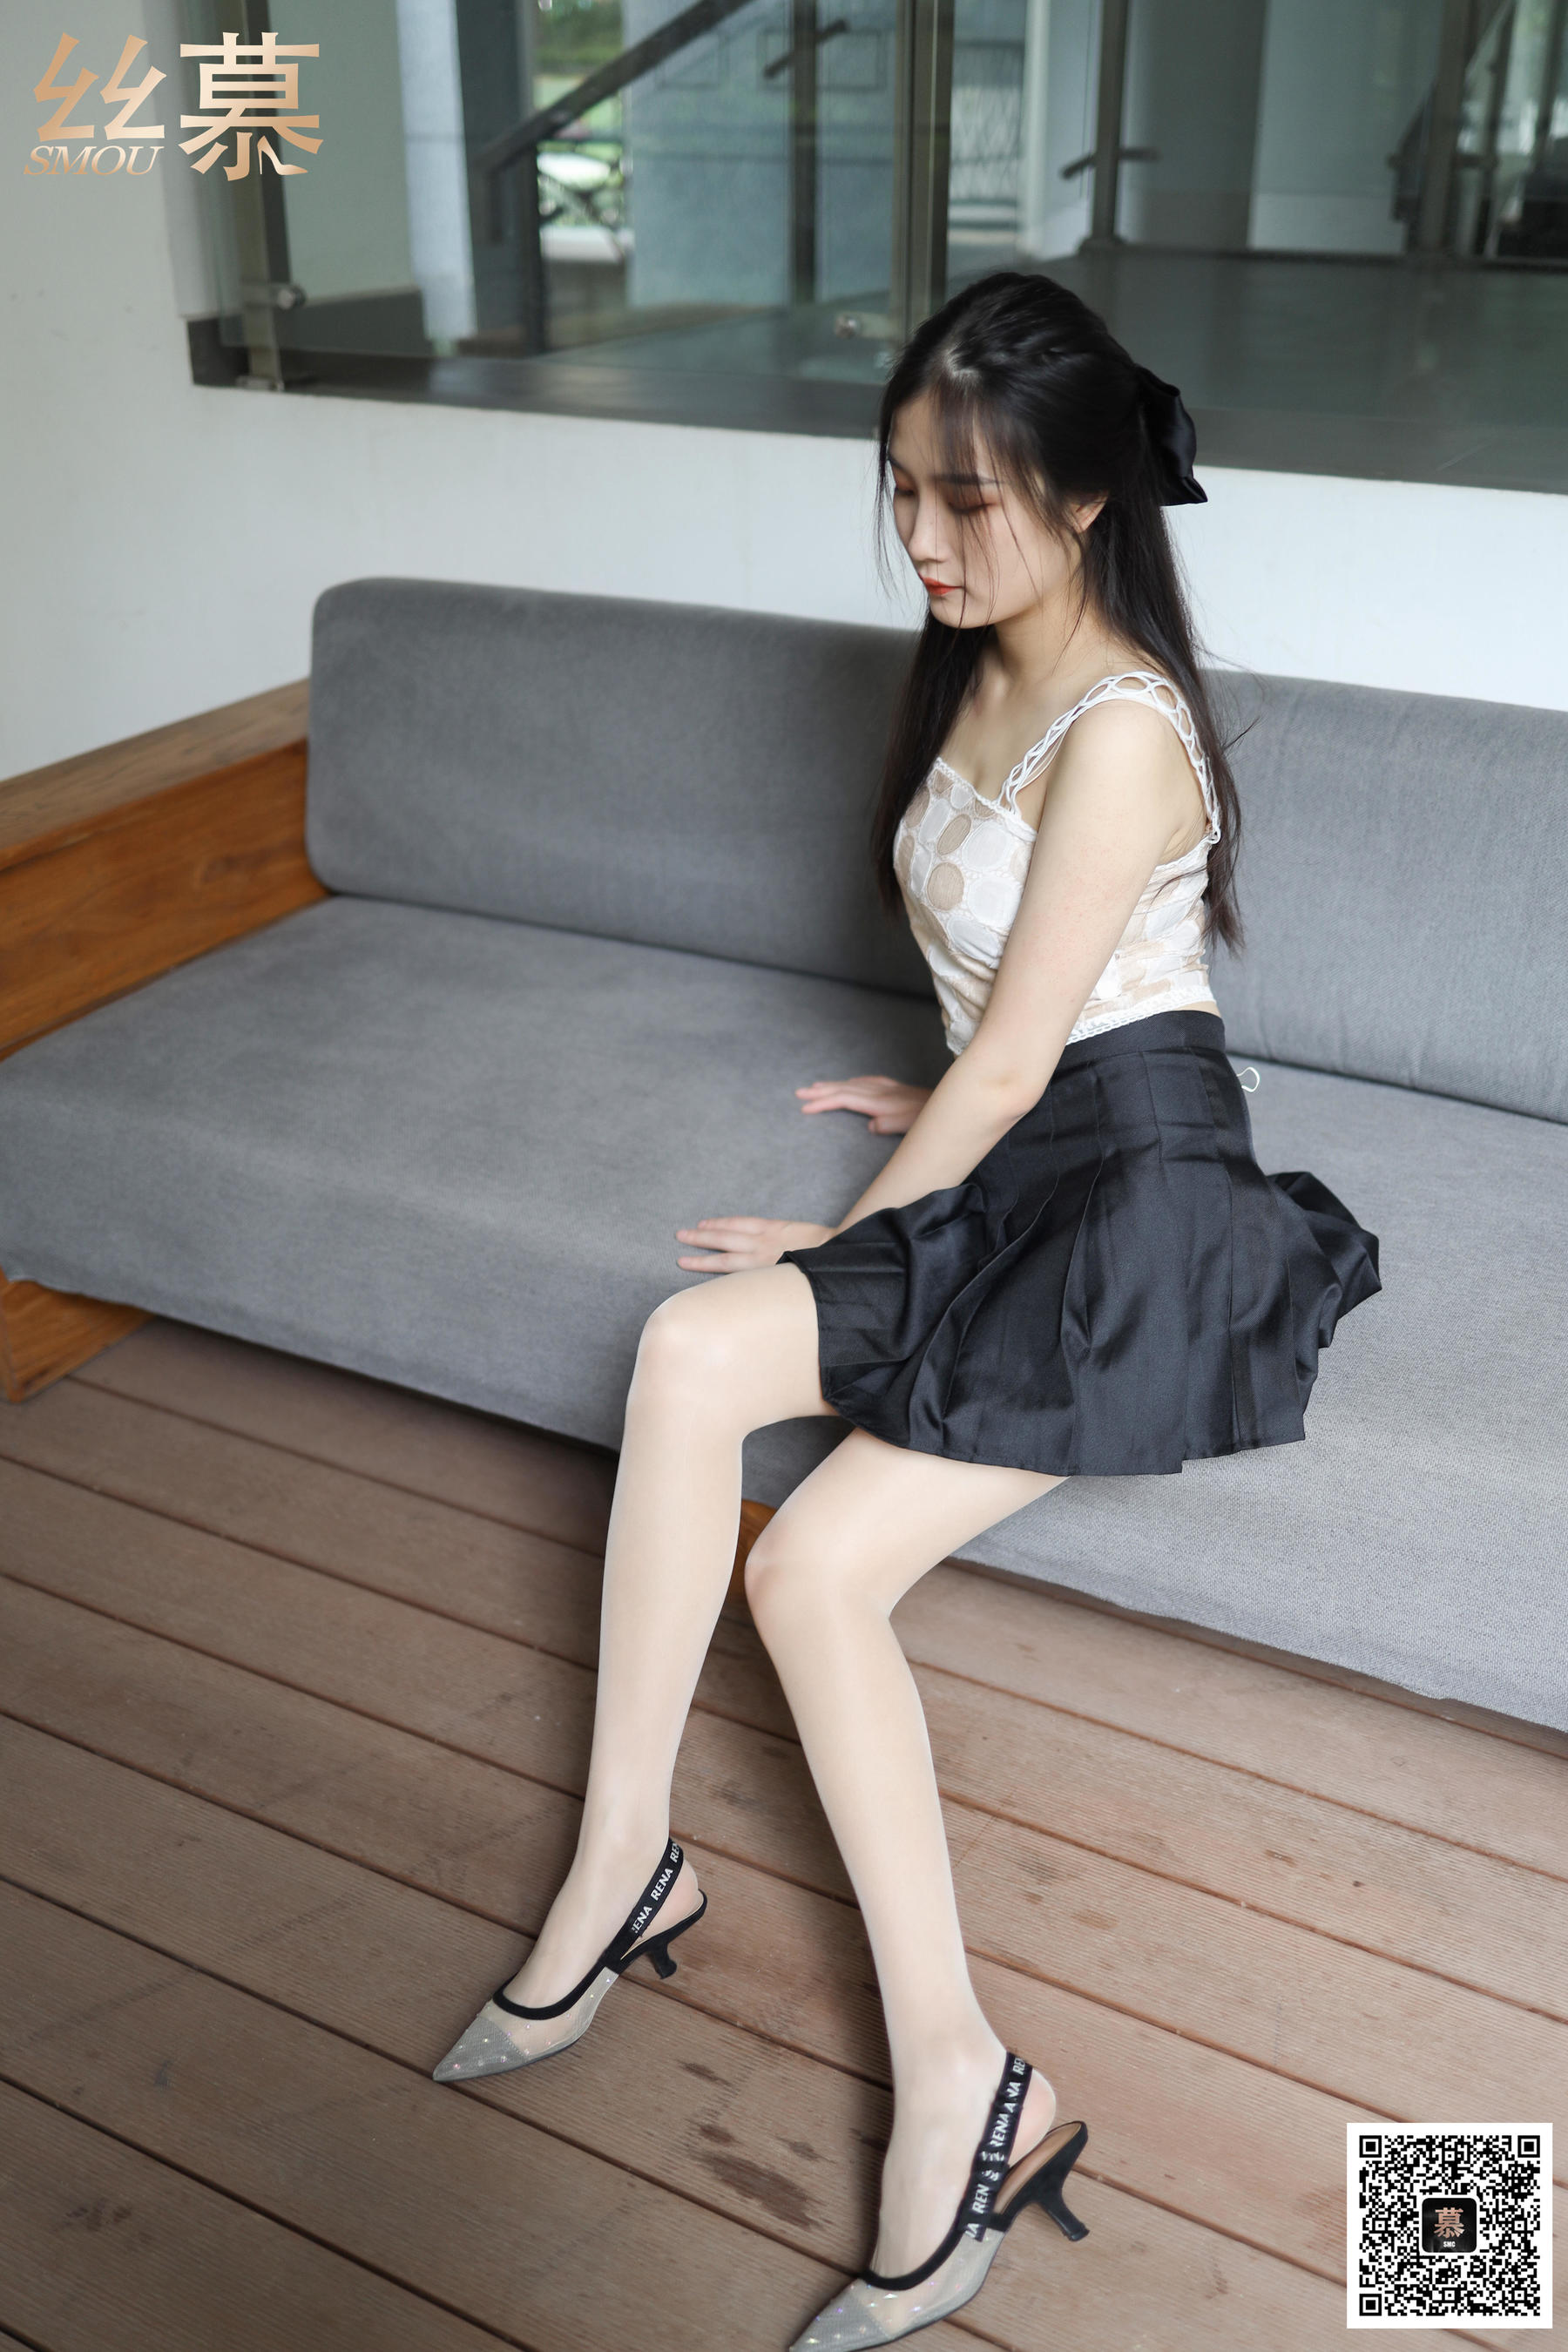 [慕 SMOU] close-up TX053 Xi Xi “Outdoor Pry also crazy” stockings beautiful leg photo set